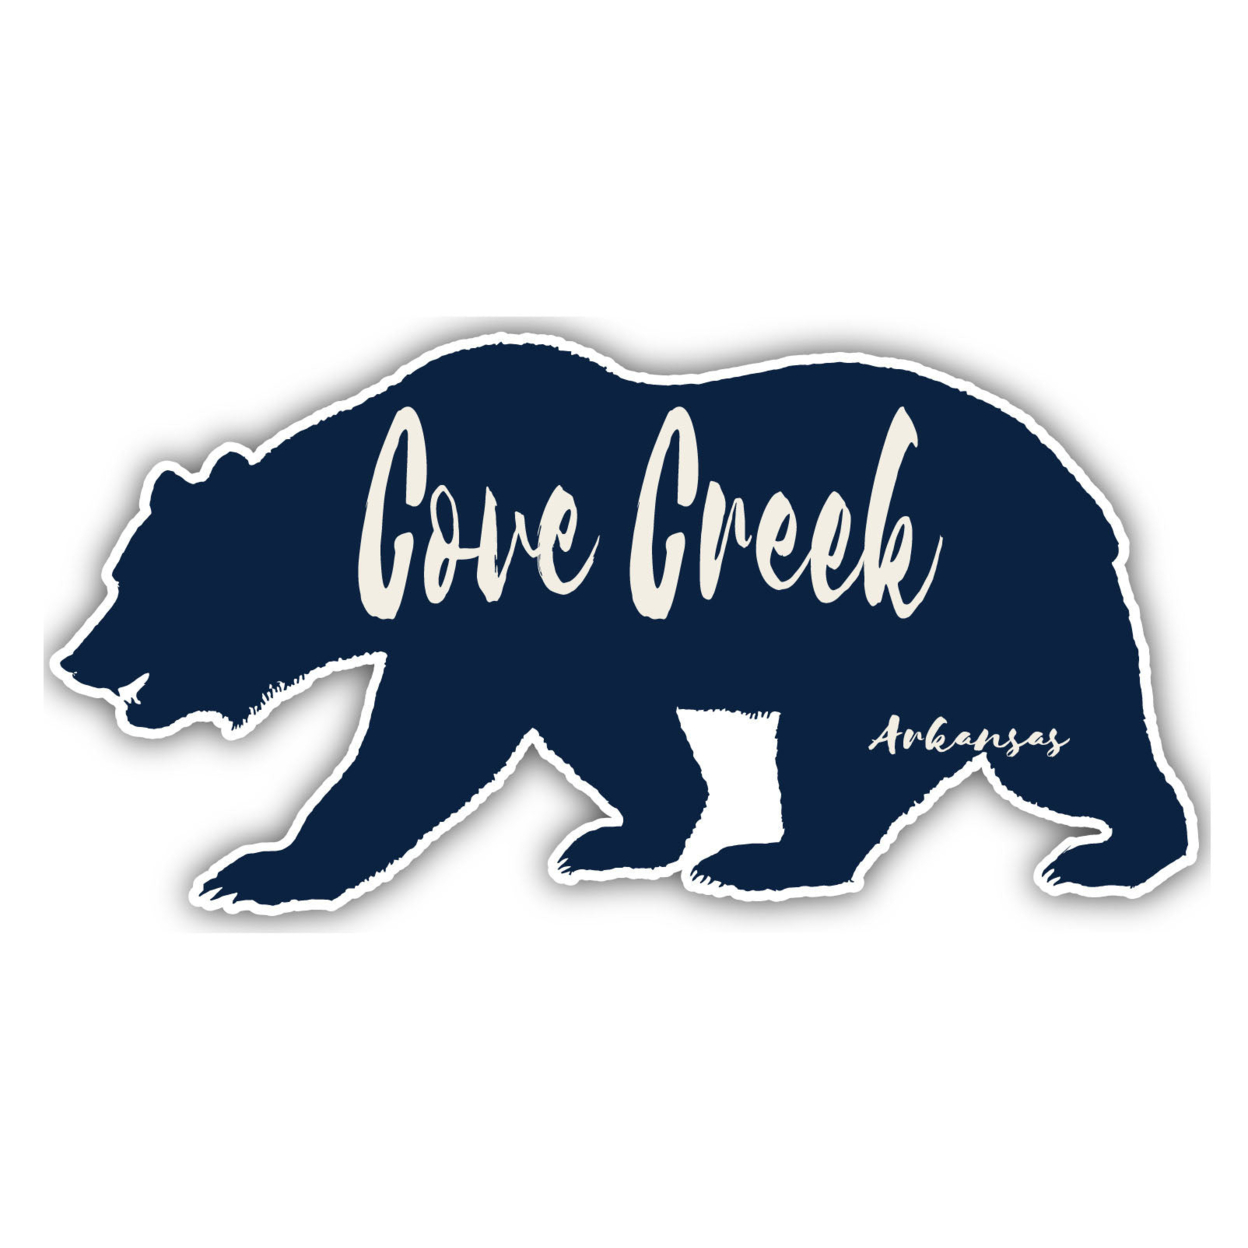 Cove Creek Arkansas Souvenir Decorative Stickers (Choose Theme And Size) - 4-Pack, 8-Inch, Bear